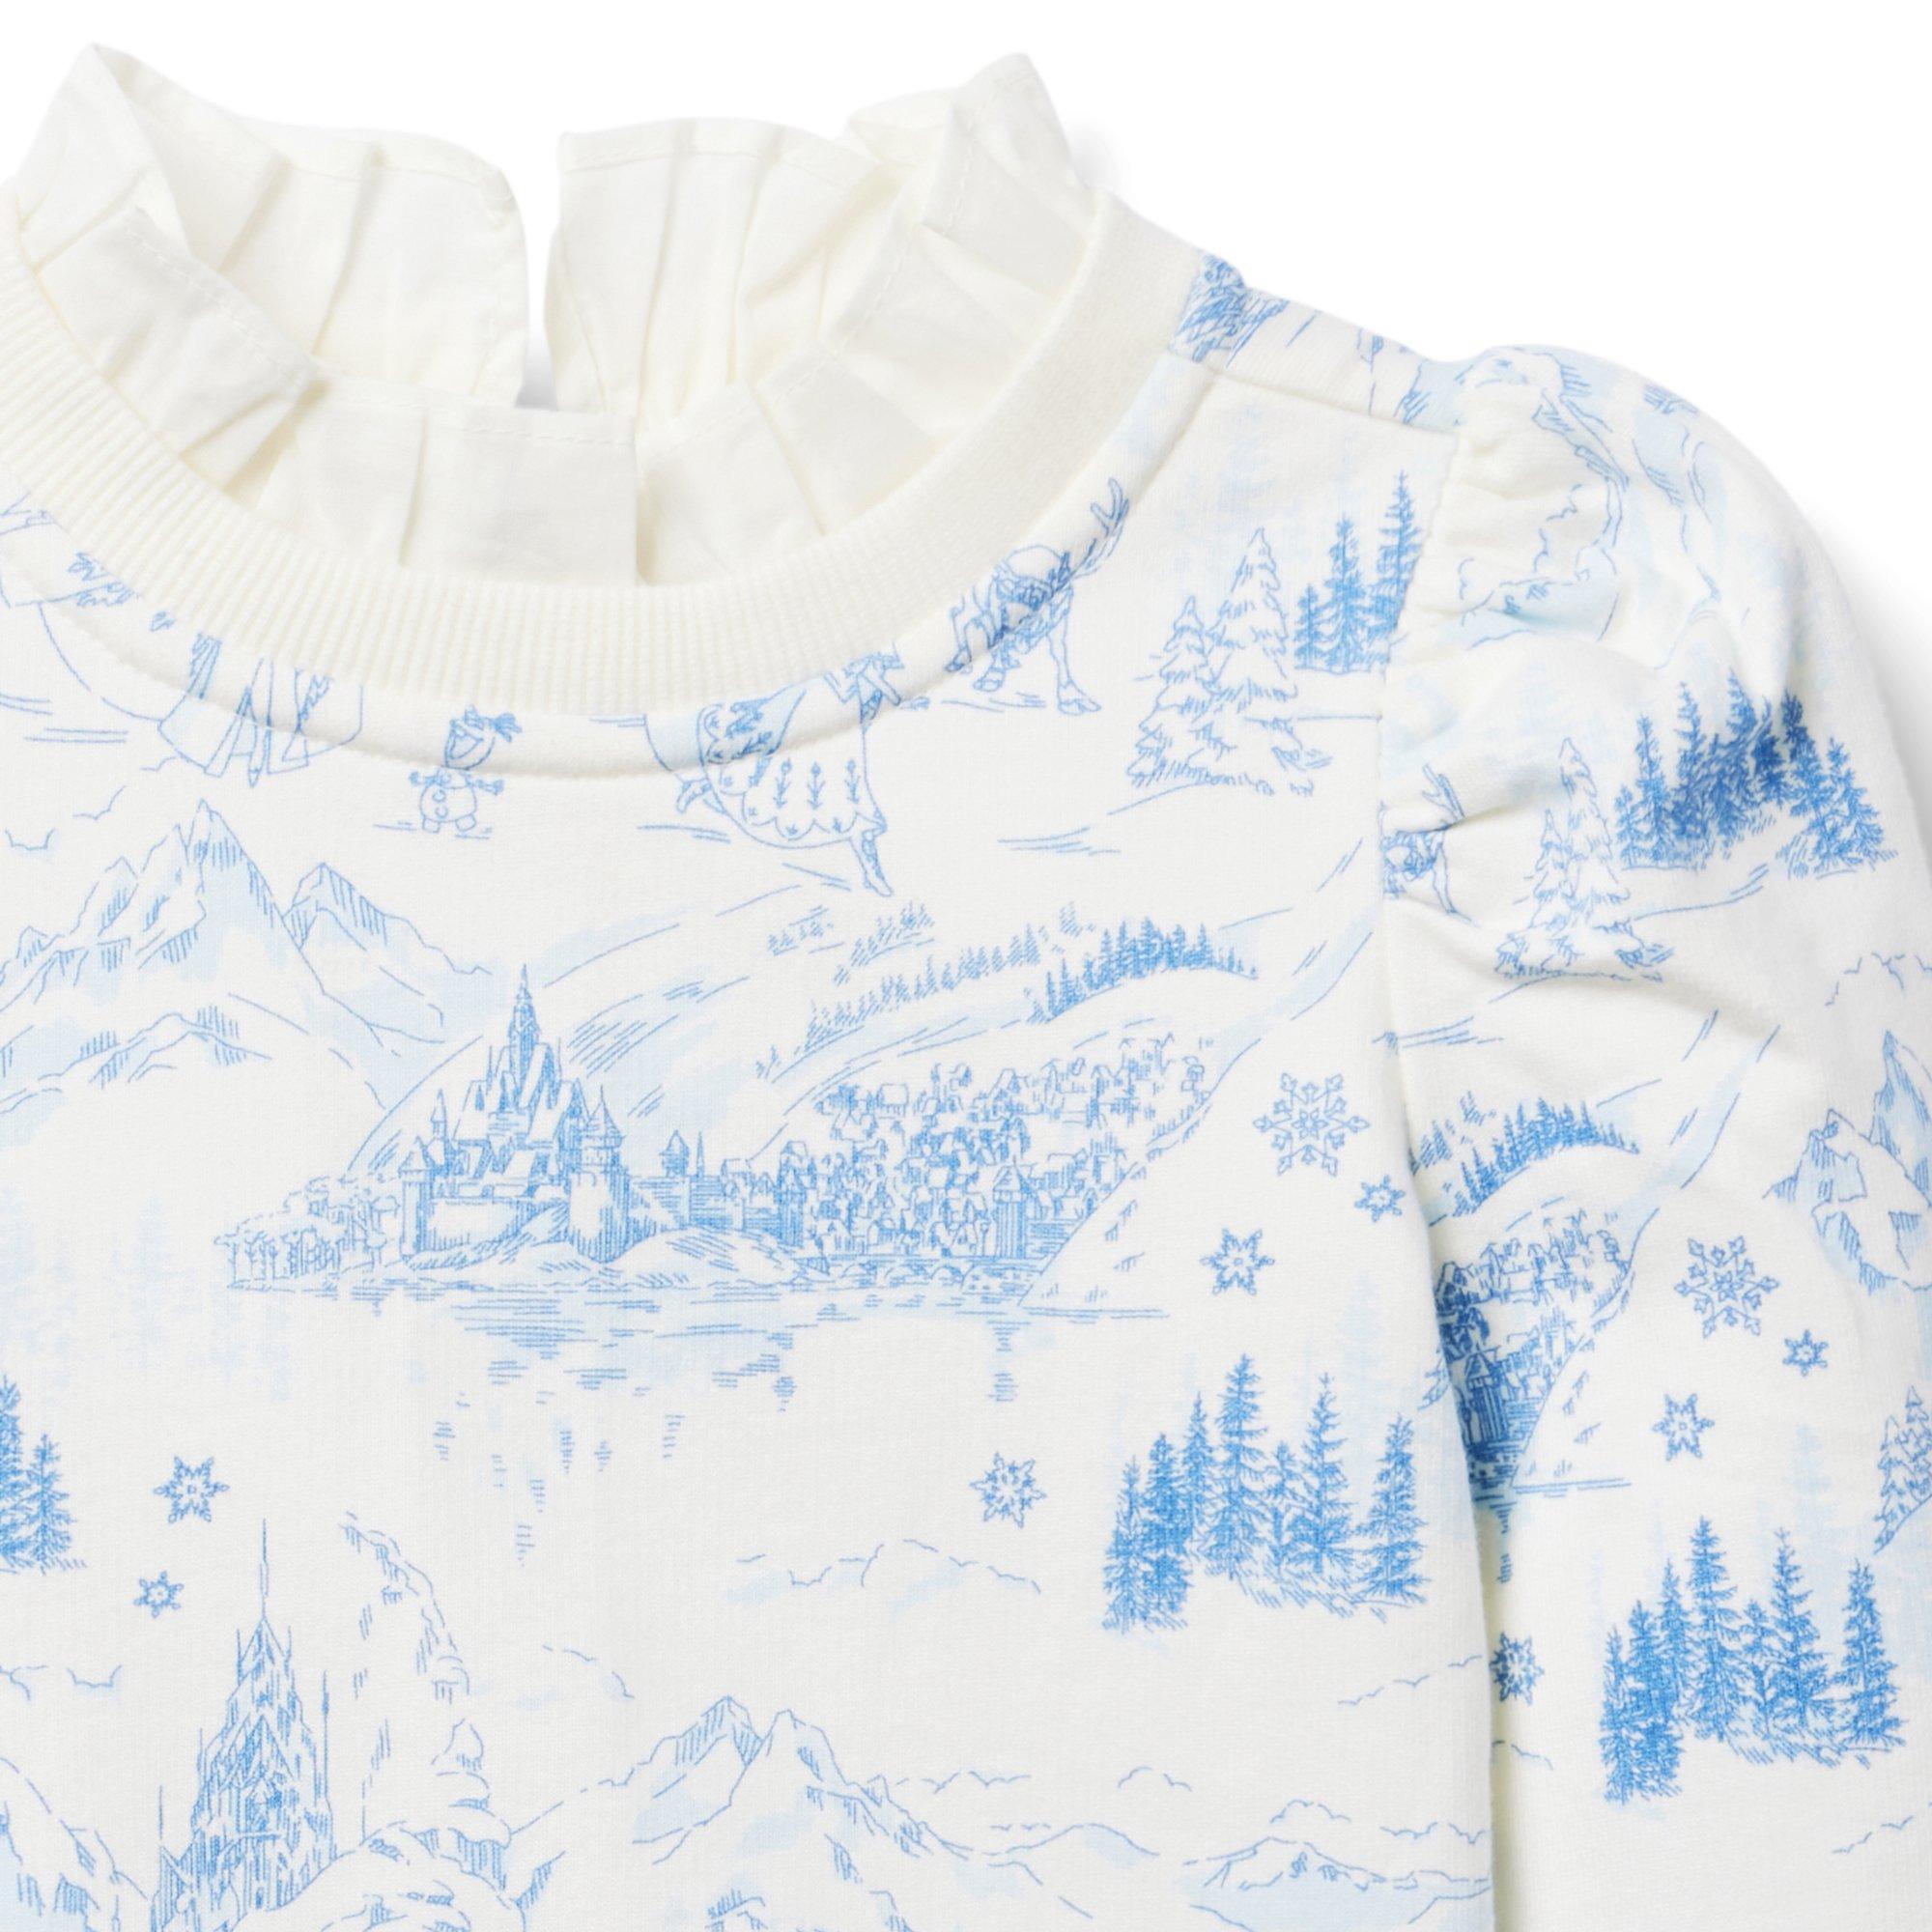 Disney Frozen Toile Sweatshirt